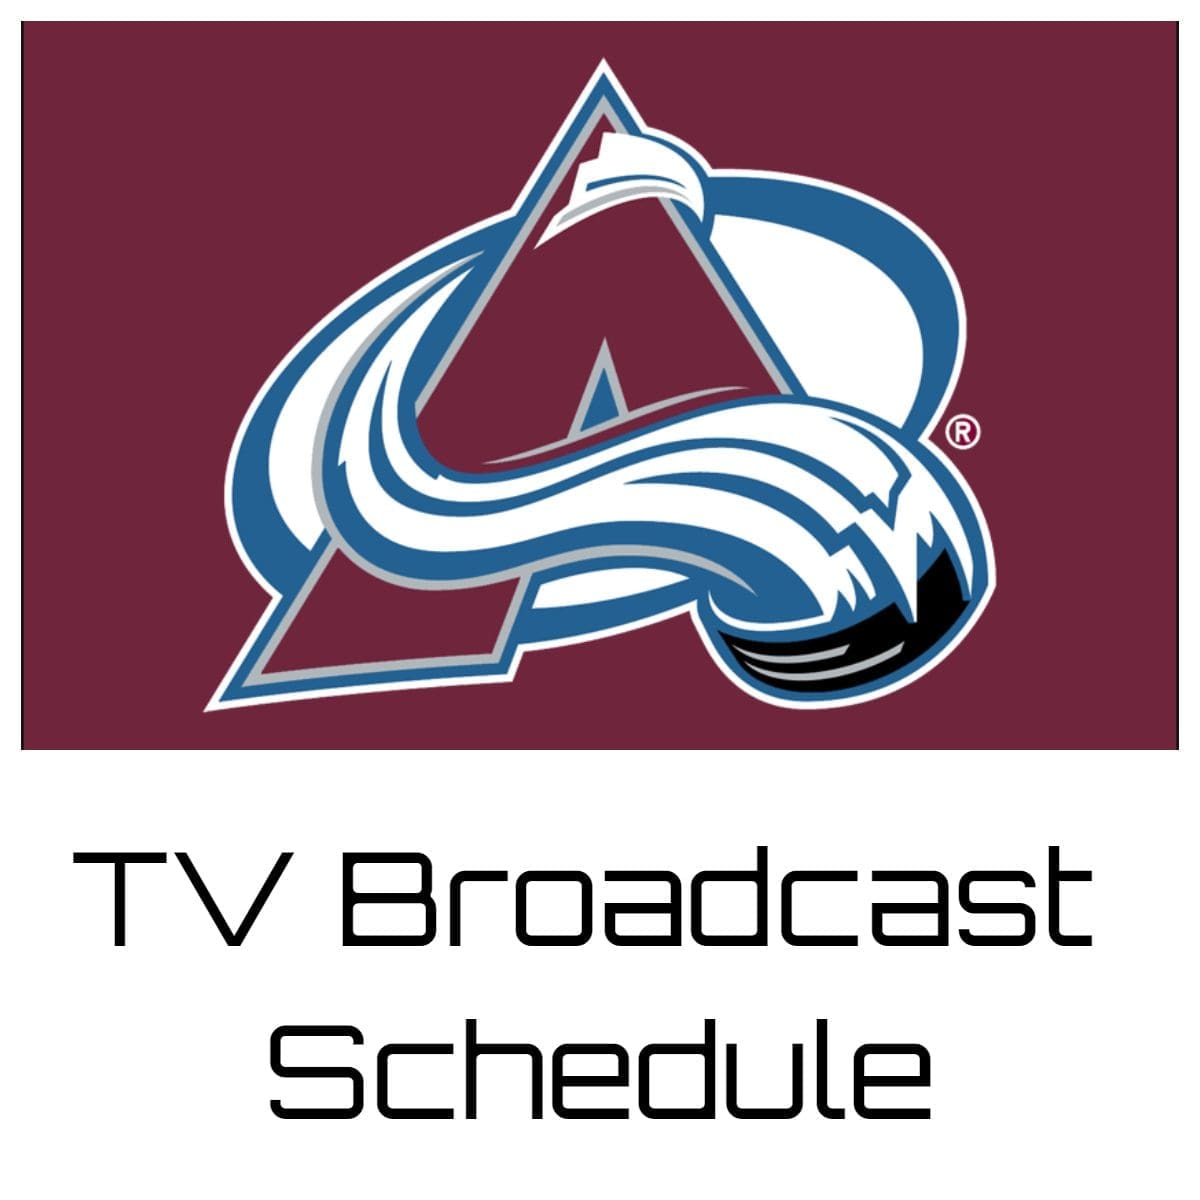 Colorado Avalanche TV Broadcast Schedule